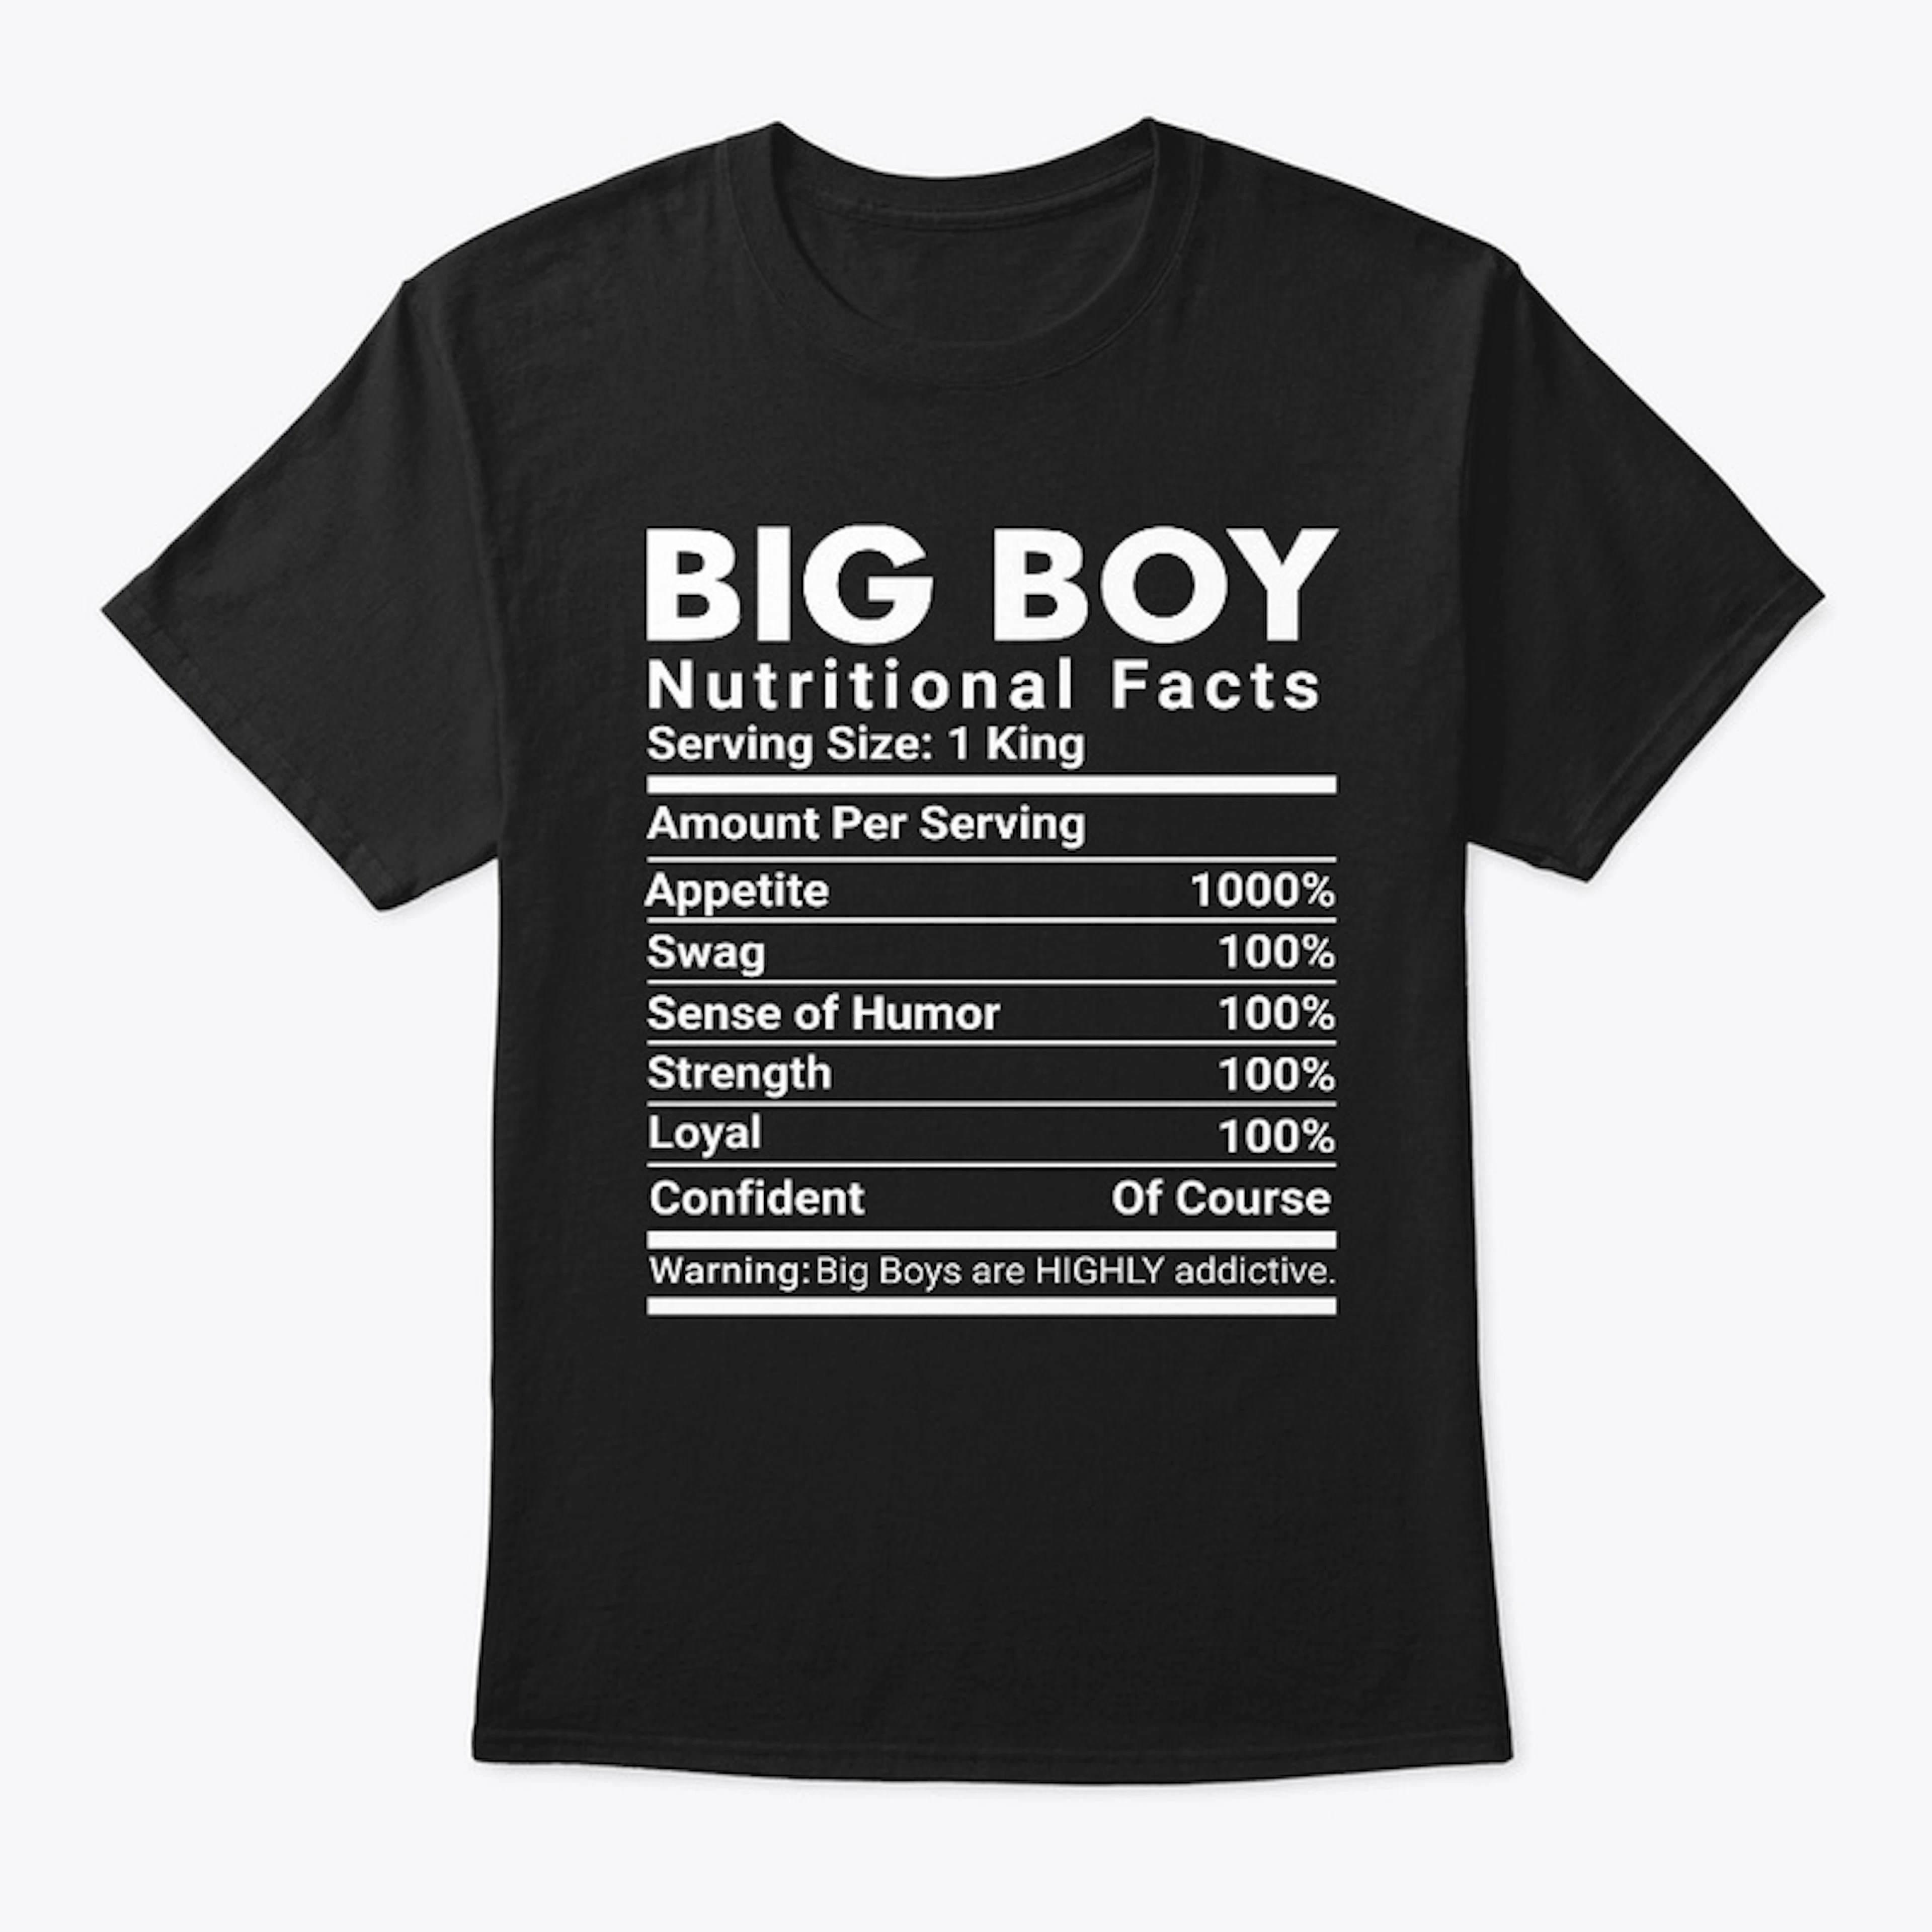 BIG BOY Nutritional Facts T Shirt